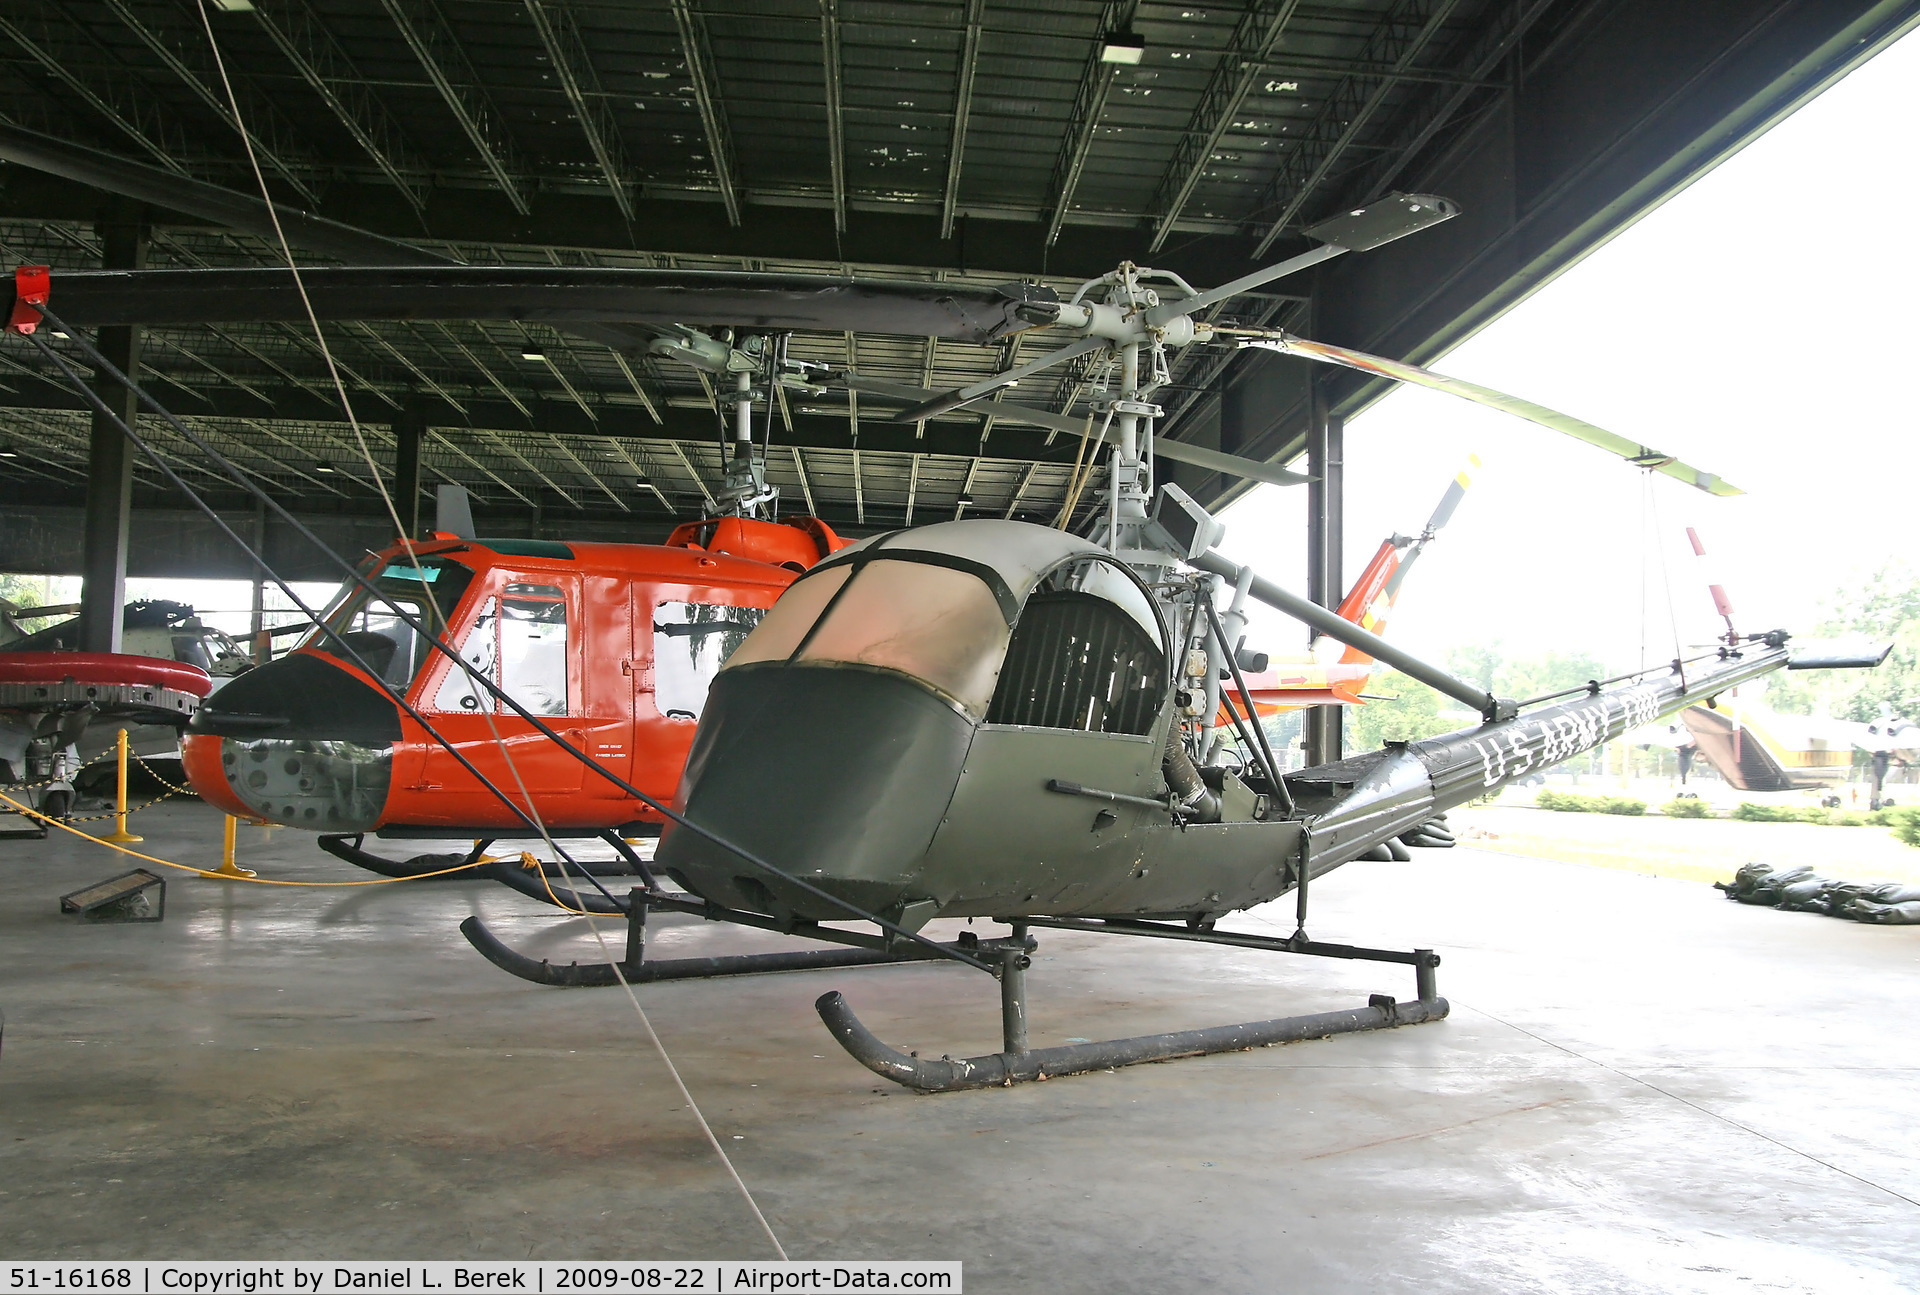 51-16168, 1951 Hiller UH-12B Raven C/N 328, On display at the United States Transportation Muesum